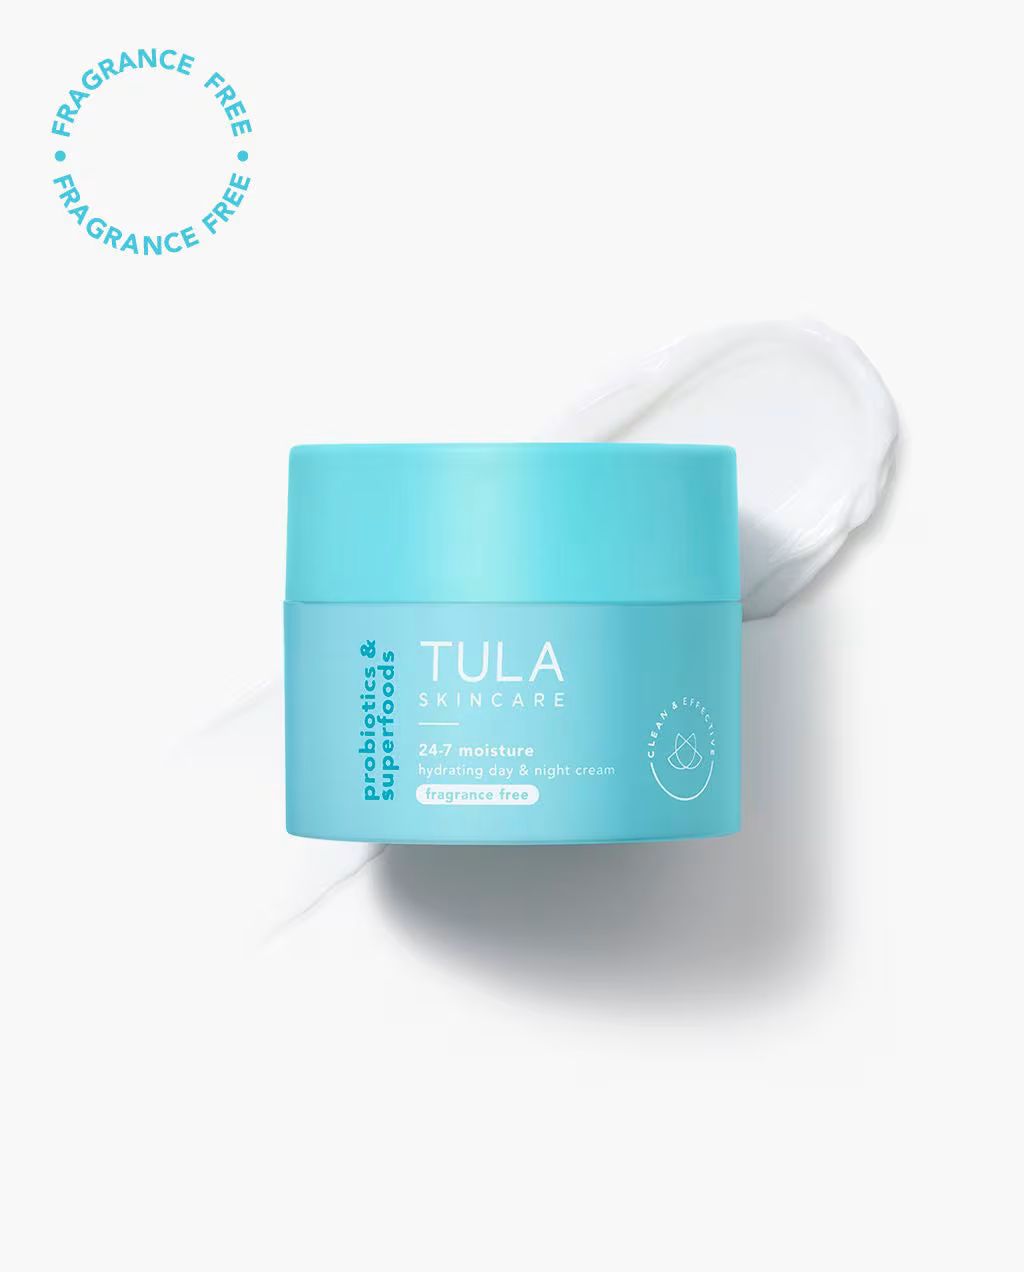 hydrating day & night cream - fragrance free | Tula Skincare